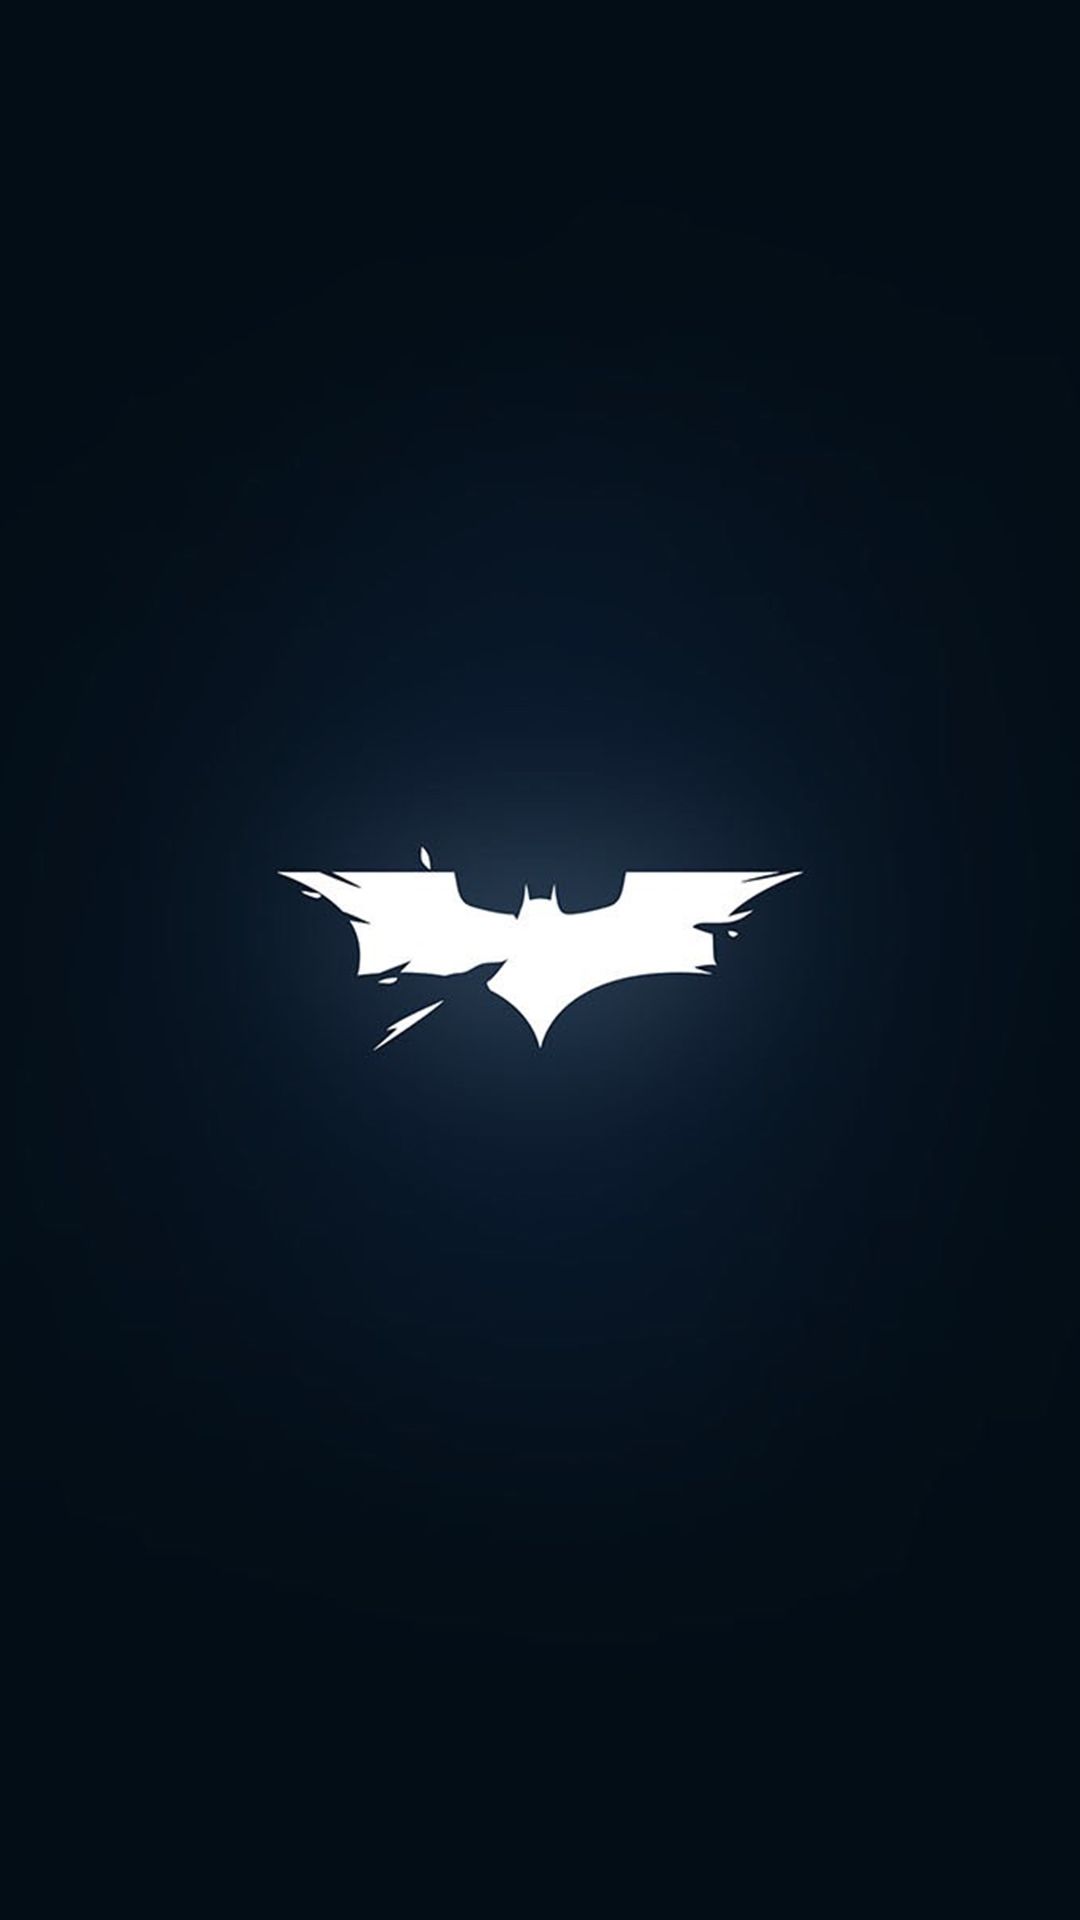  Batman Hintergrundbild 1080x1920. Batman Wallpaper 1080x1920 on WallpaperBeast.com. Batman wallpaper, Batman logo, Batman comics